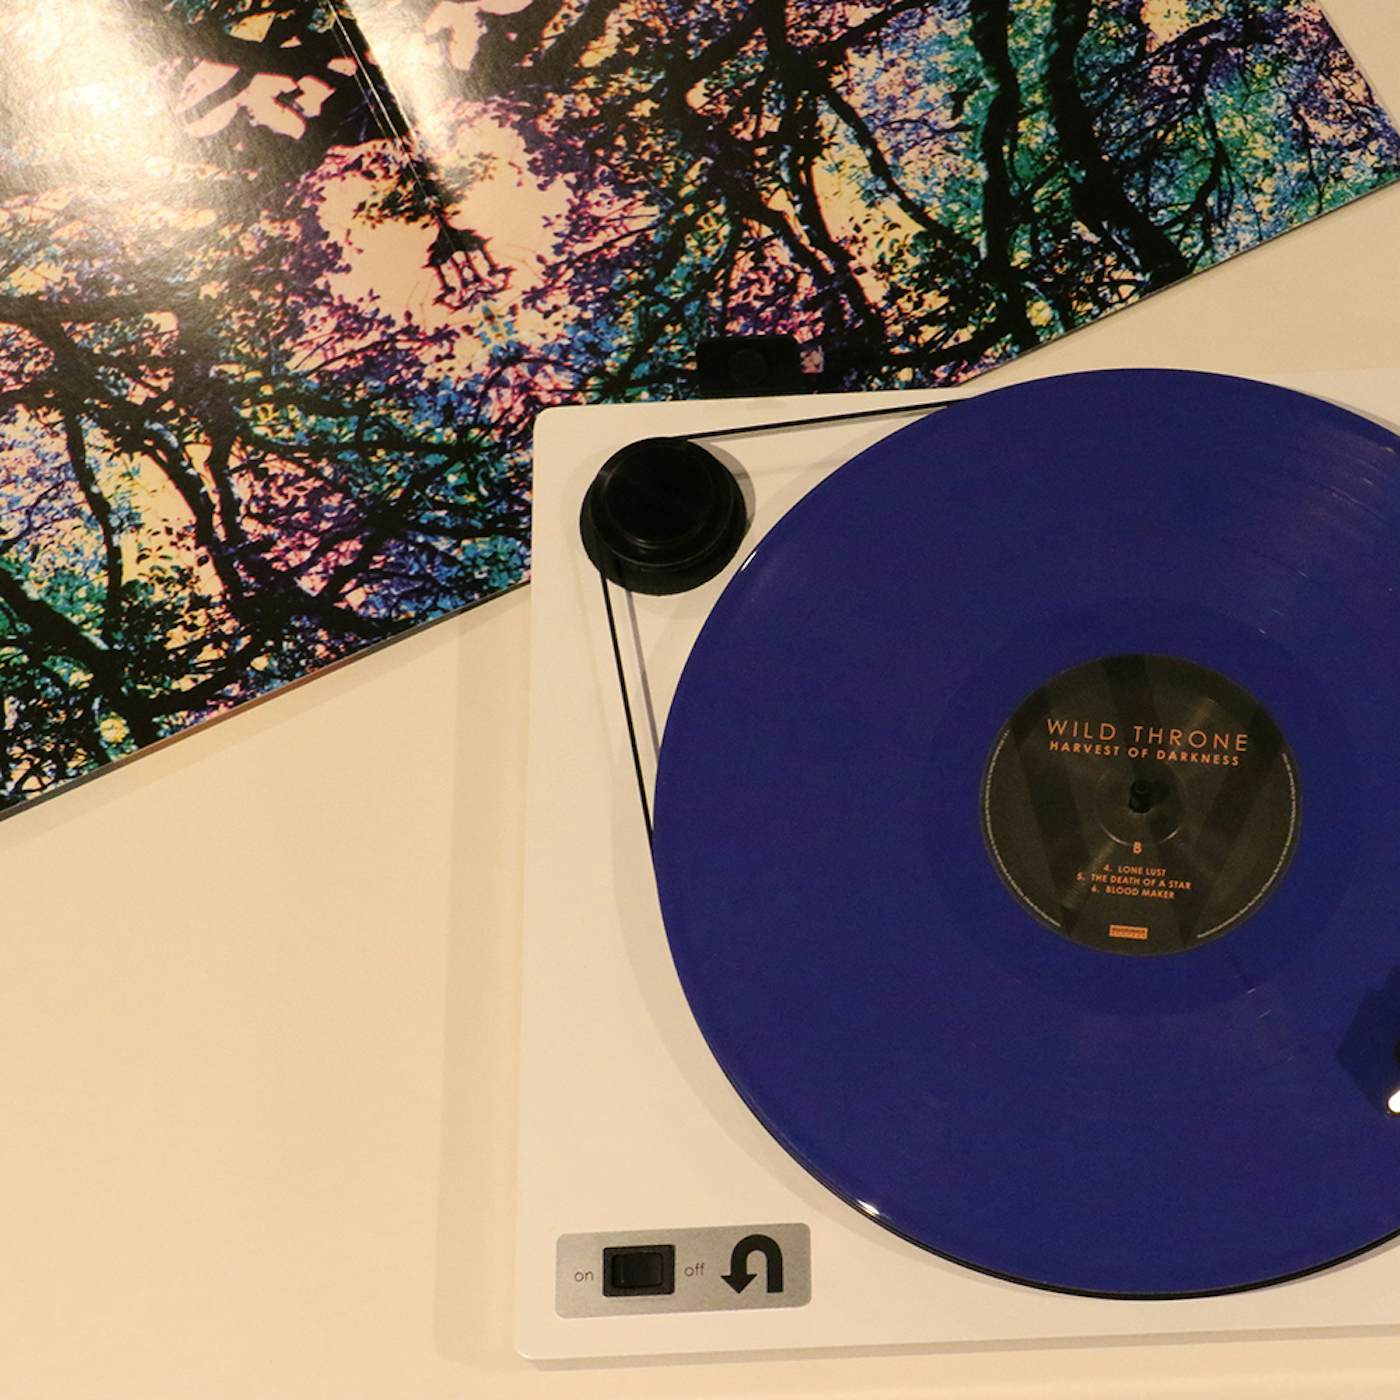 Wild Throne Harvest of Darkness – 2LP Colored Vinyl (Marbled Blue)